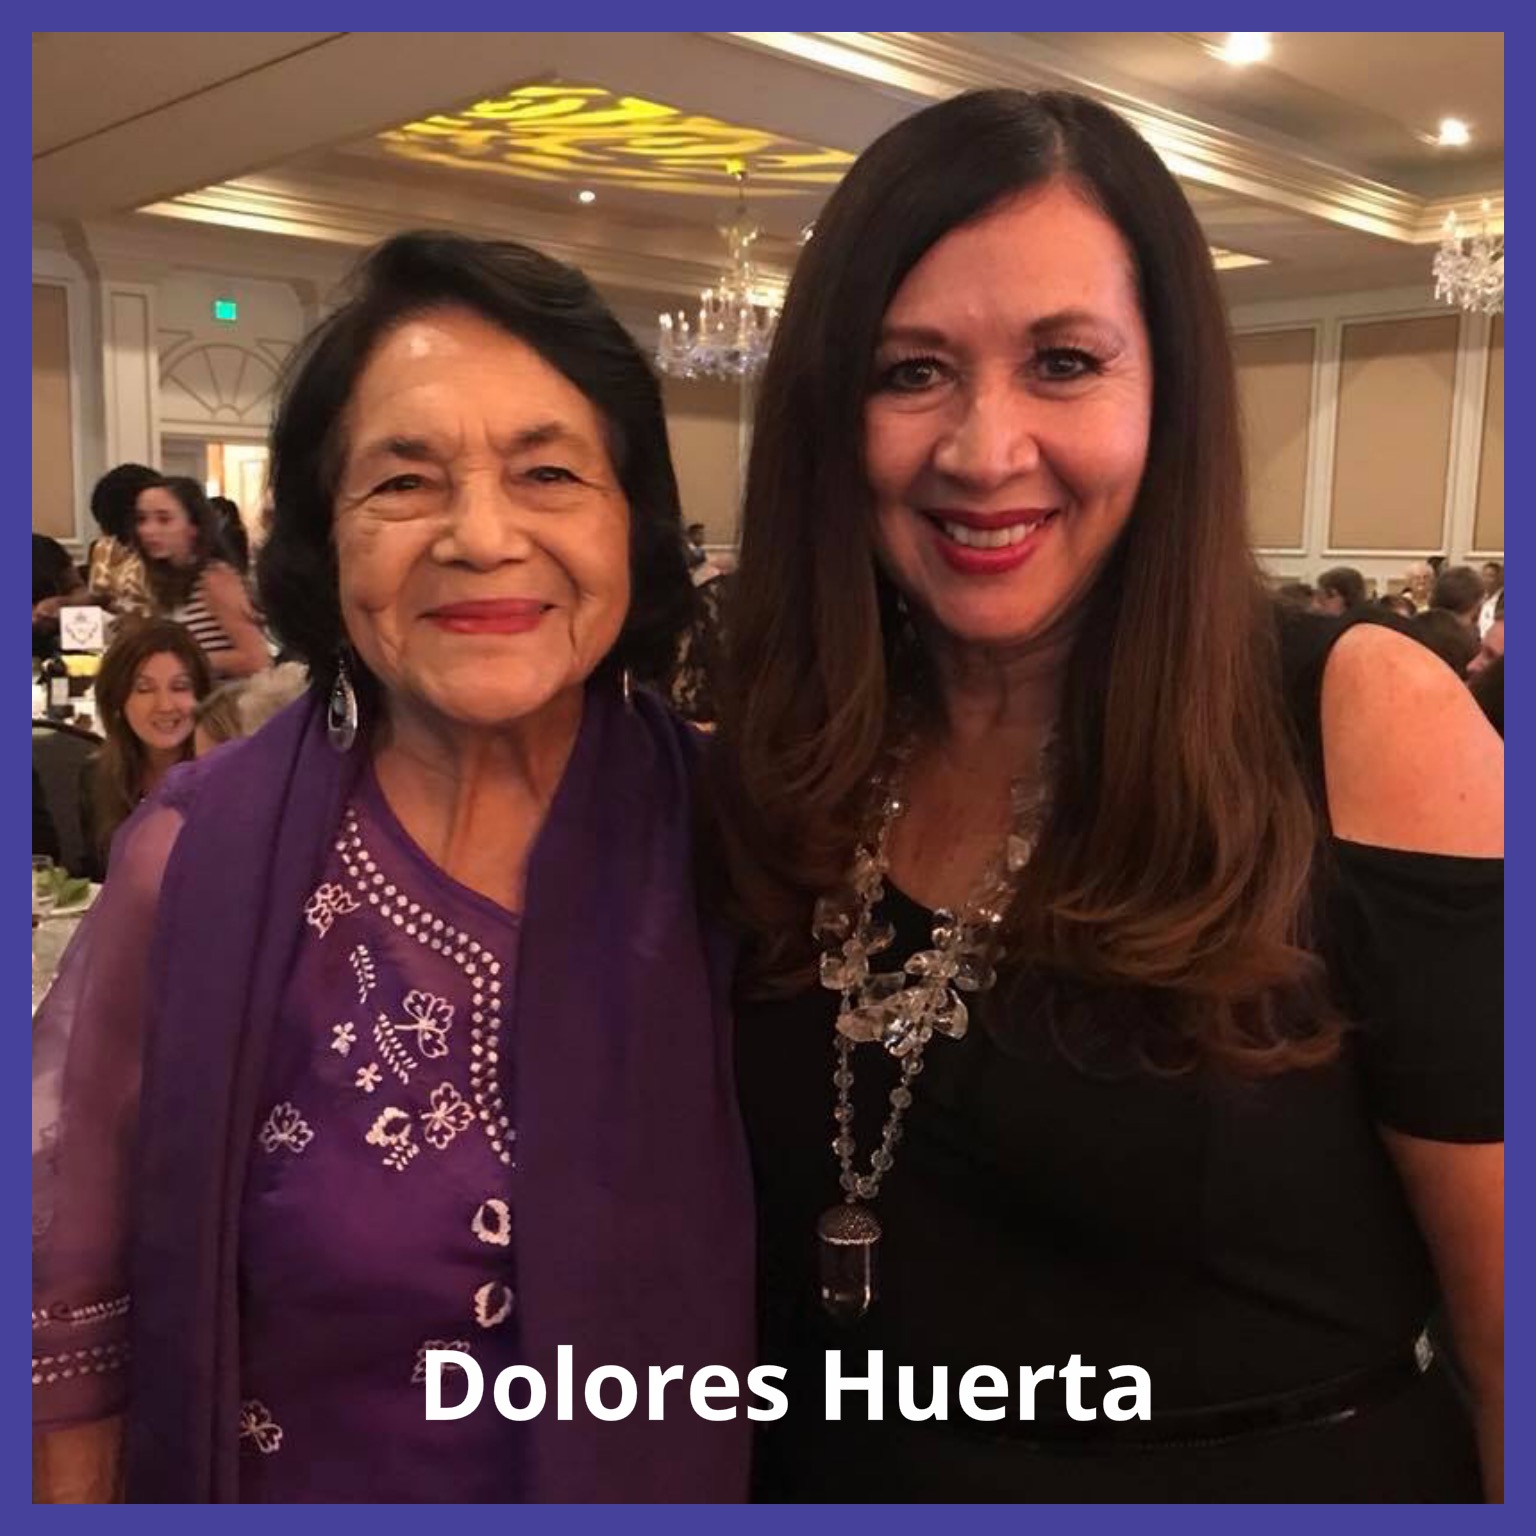 Celebrating my hero Dolores Huerta